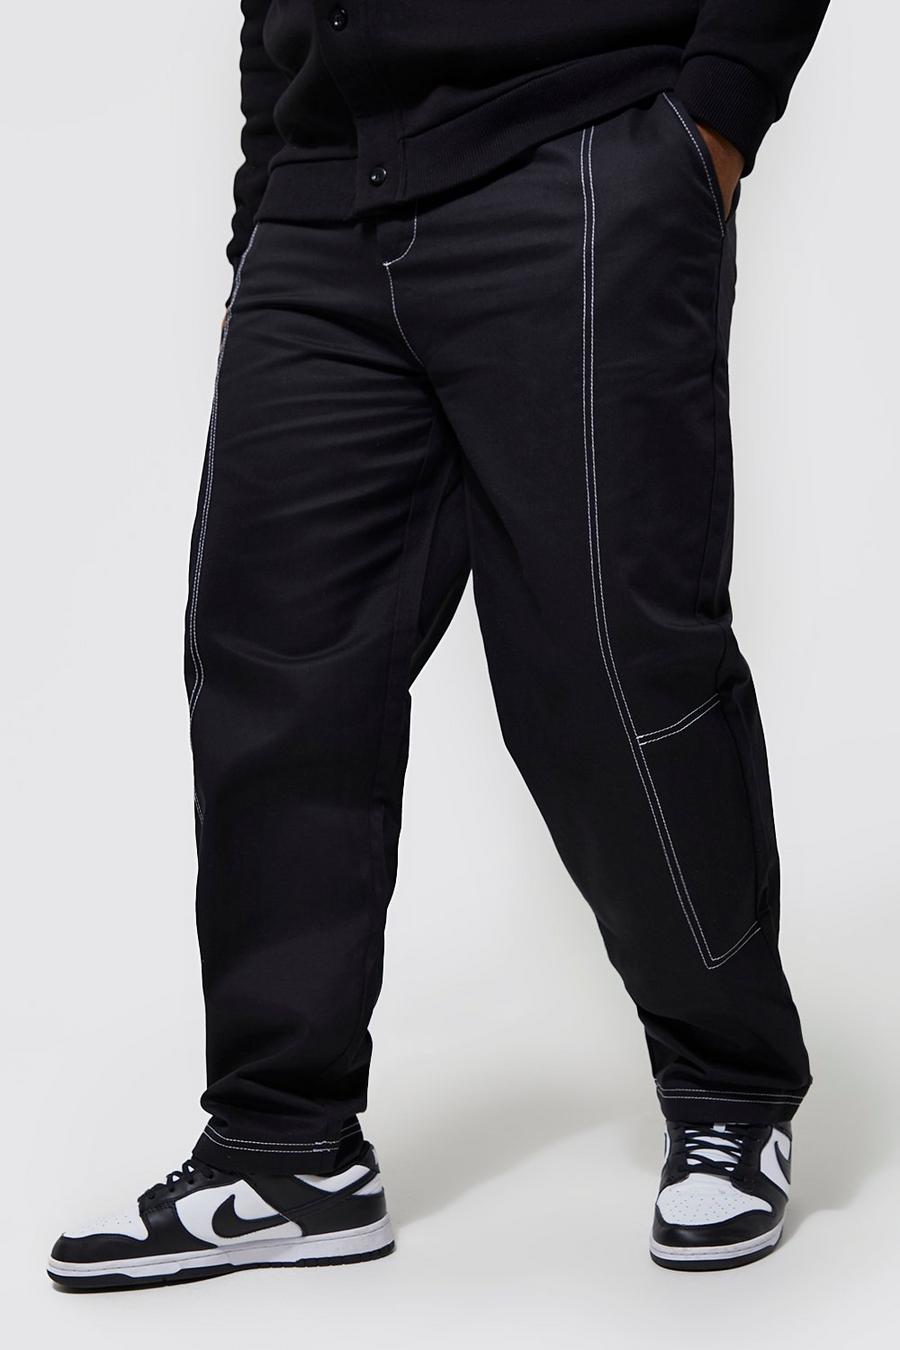 Pantalón Plus de pernera recta con detalle de costuras, Black negro